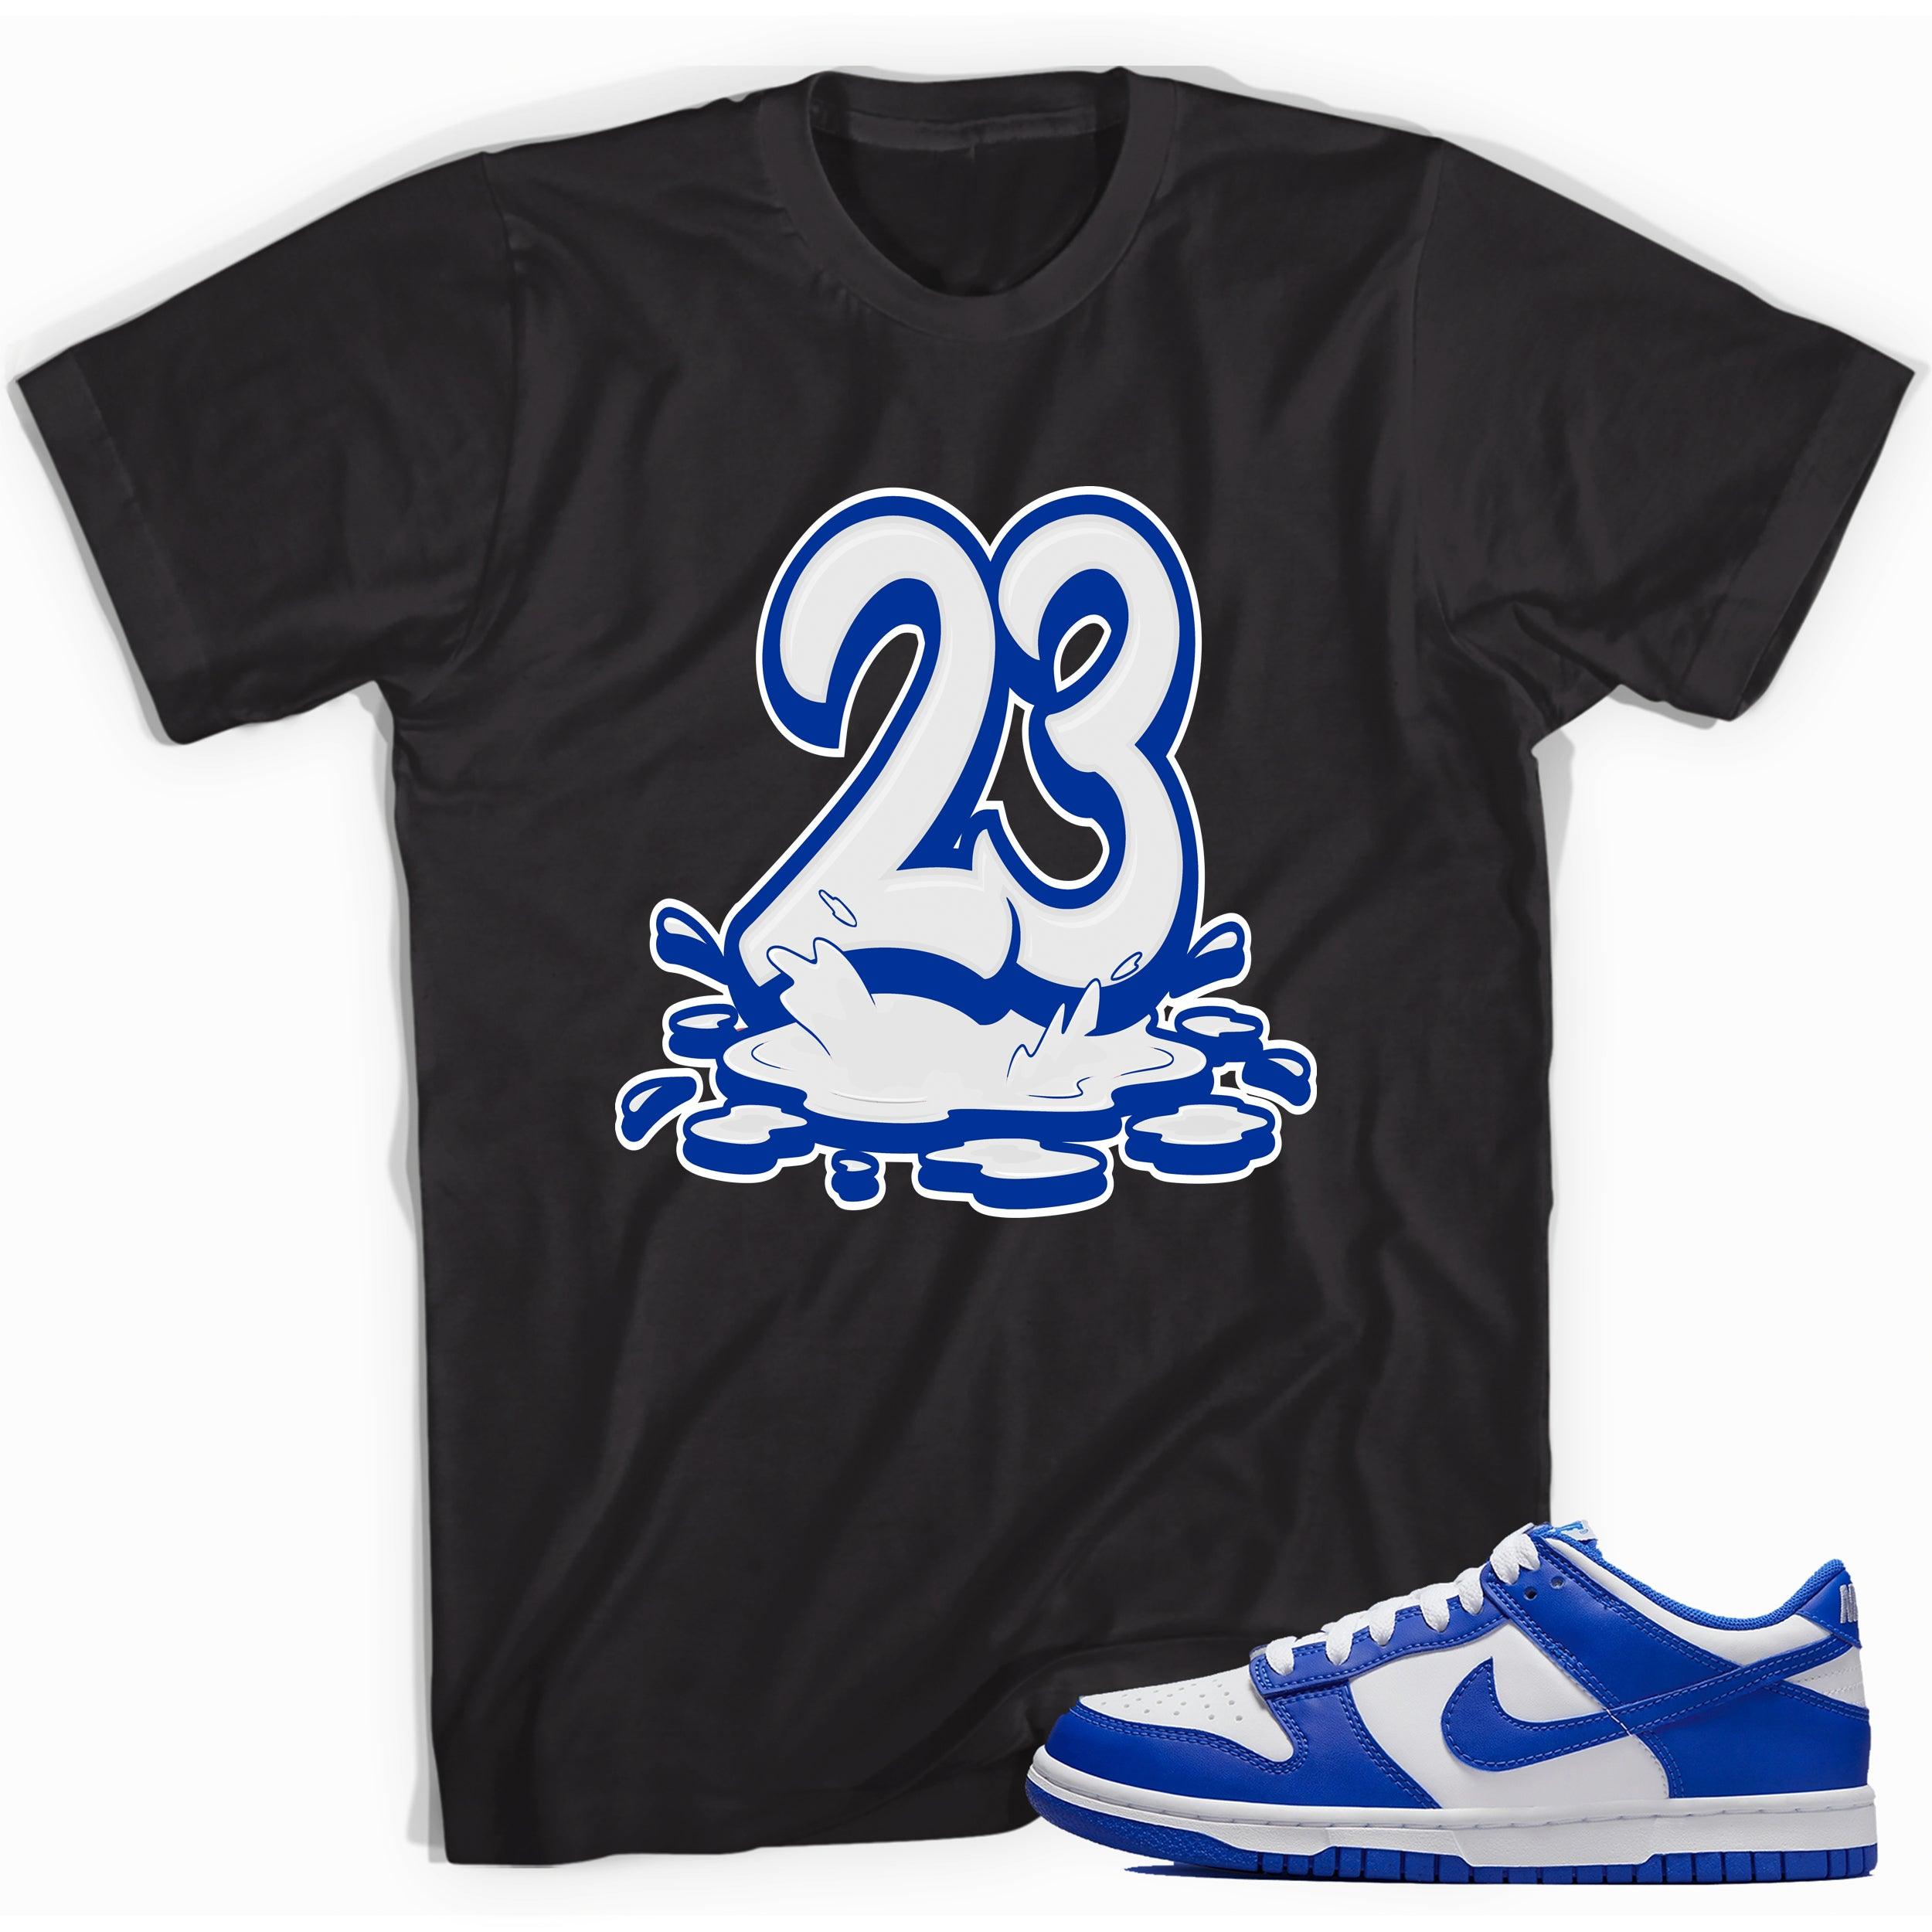 23 Melting Shirt Nike Dunk Low Racer Blue photo